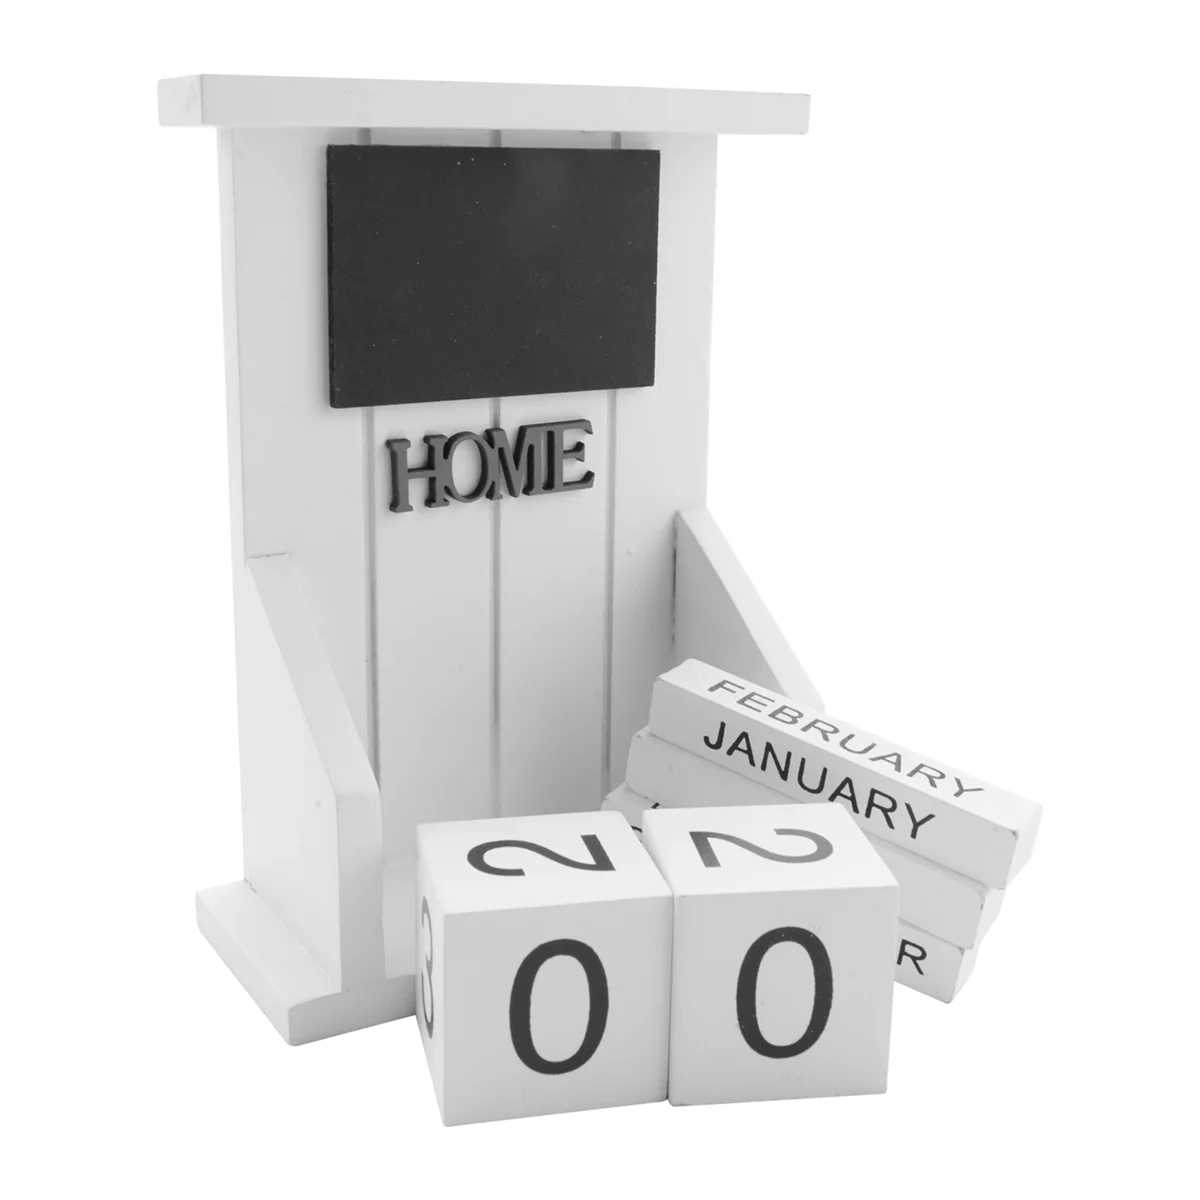 

Wooden Desk Block Calendar-Perpetual Calendar Month Date Display Home Office Decoration (White)